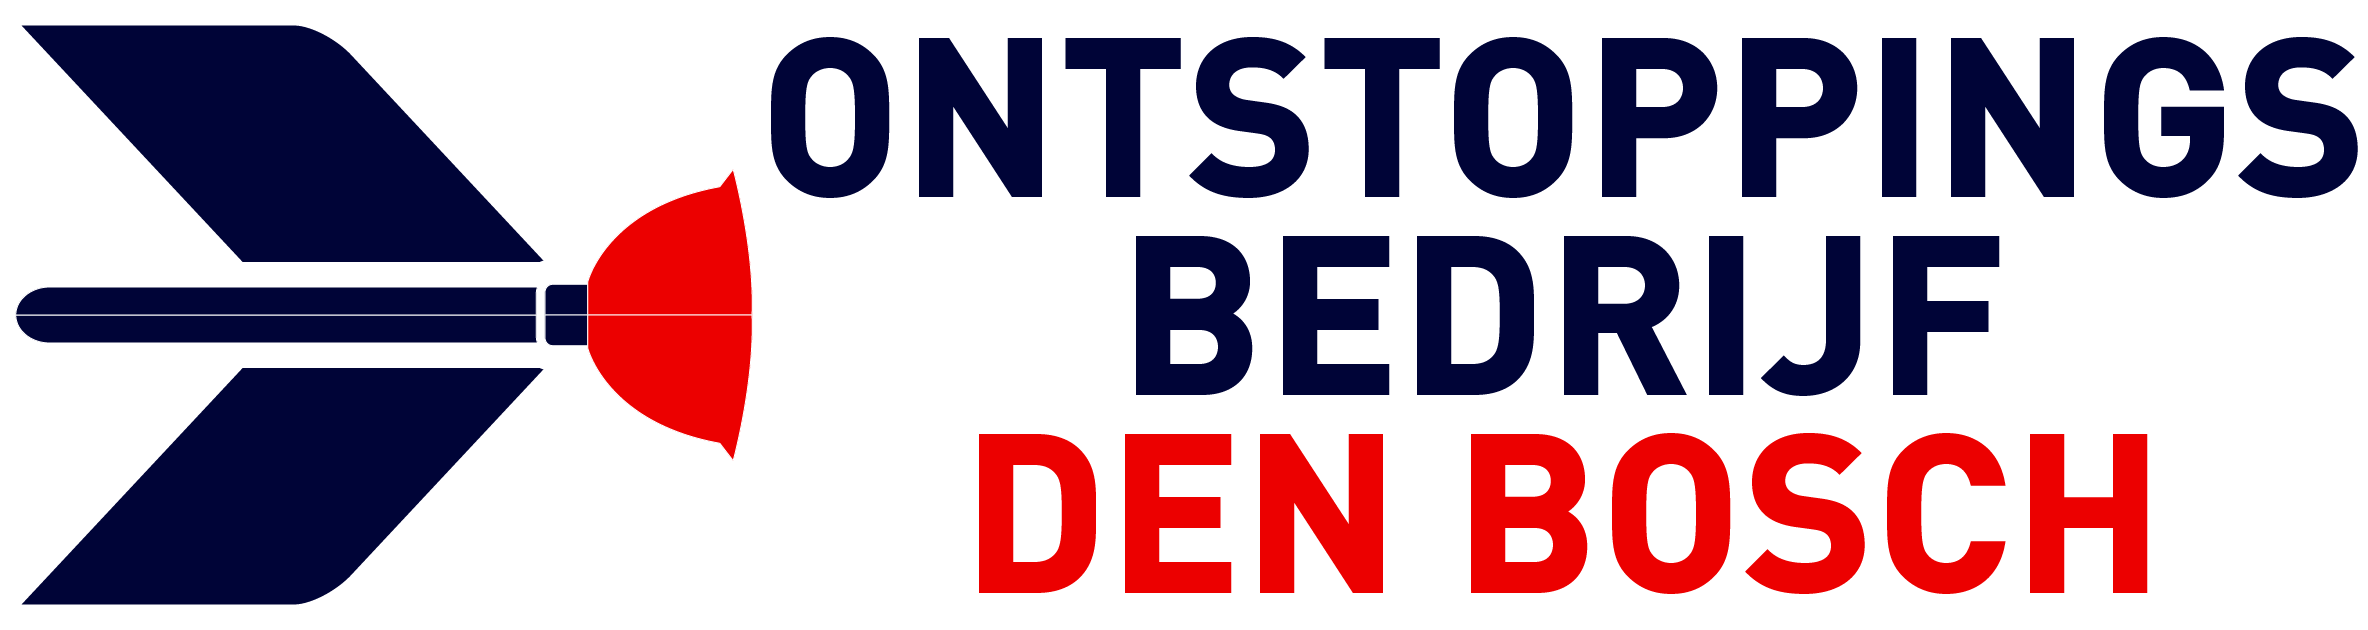 Ontstoppingsbedrijf Den Bosch logo